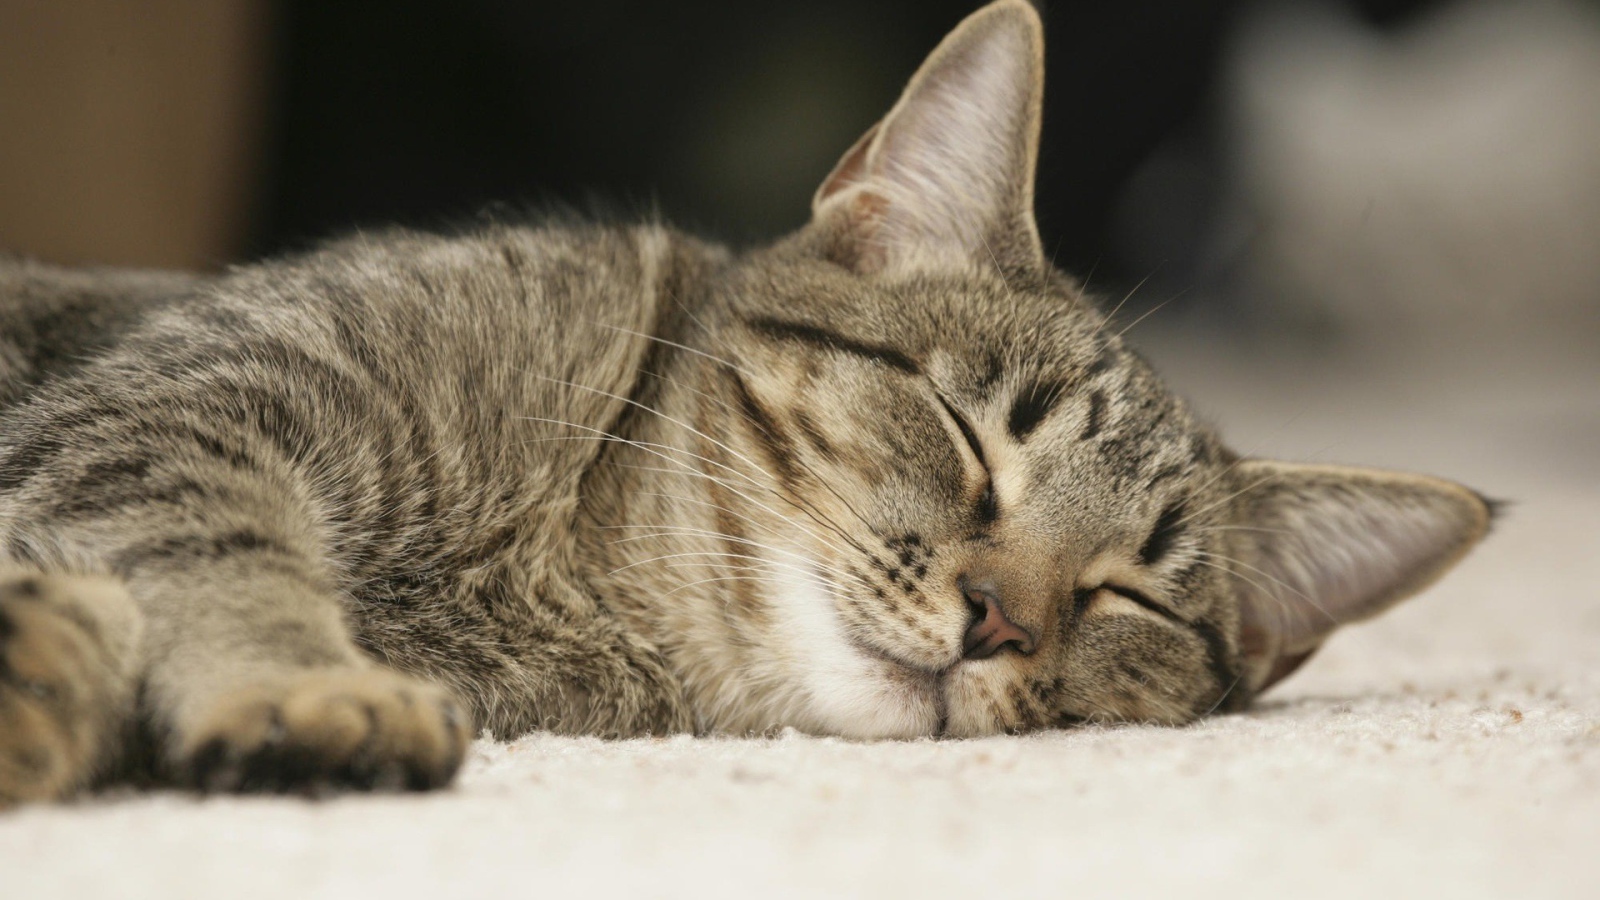 Sleeping housecat